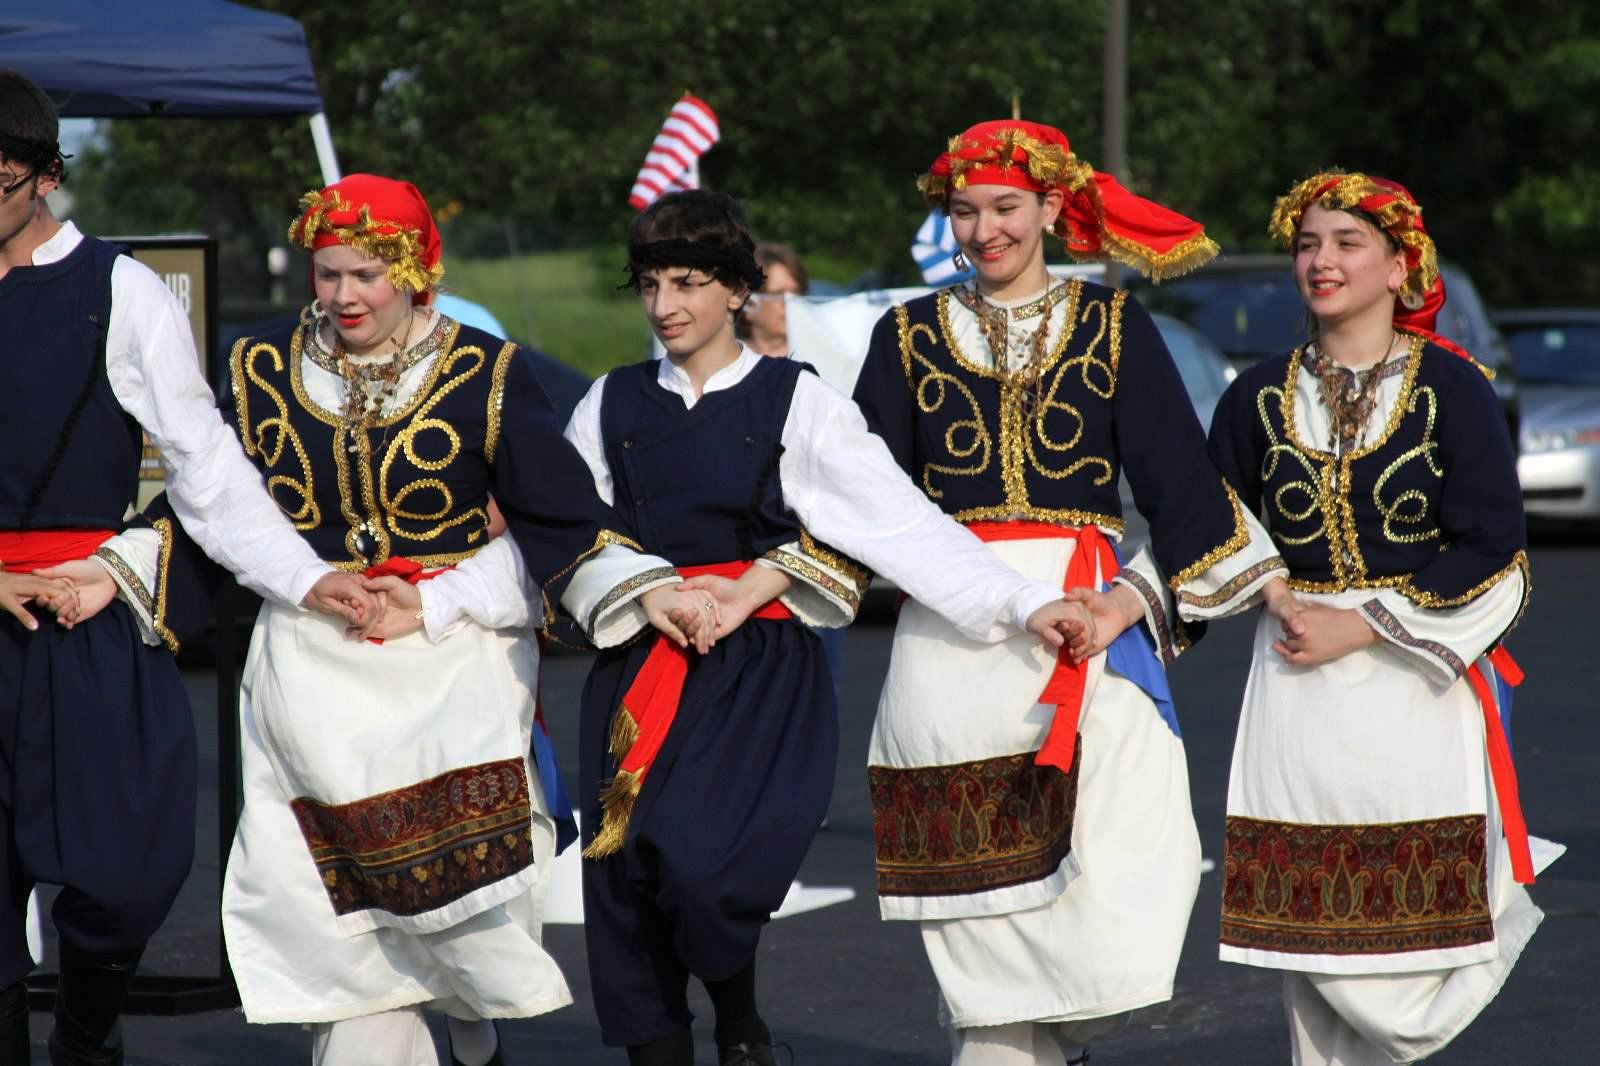 dancers-ages-11-18-perform-regional-folk-dances-of-greece-at-the-opa-big-fat-greek-festival.jpg